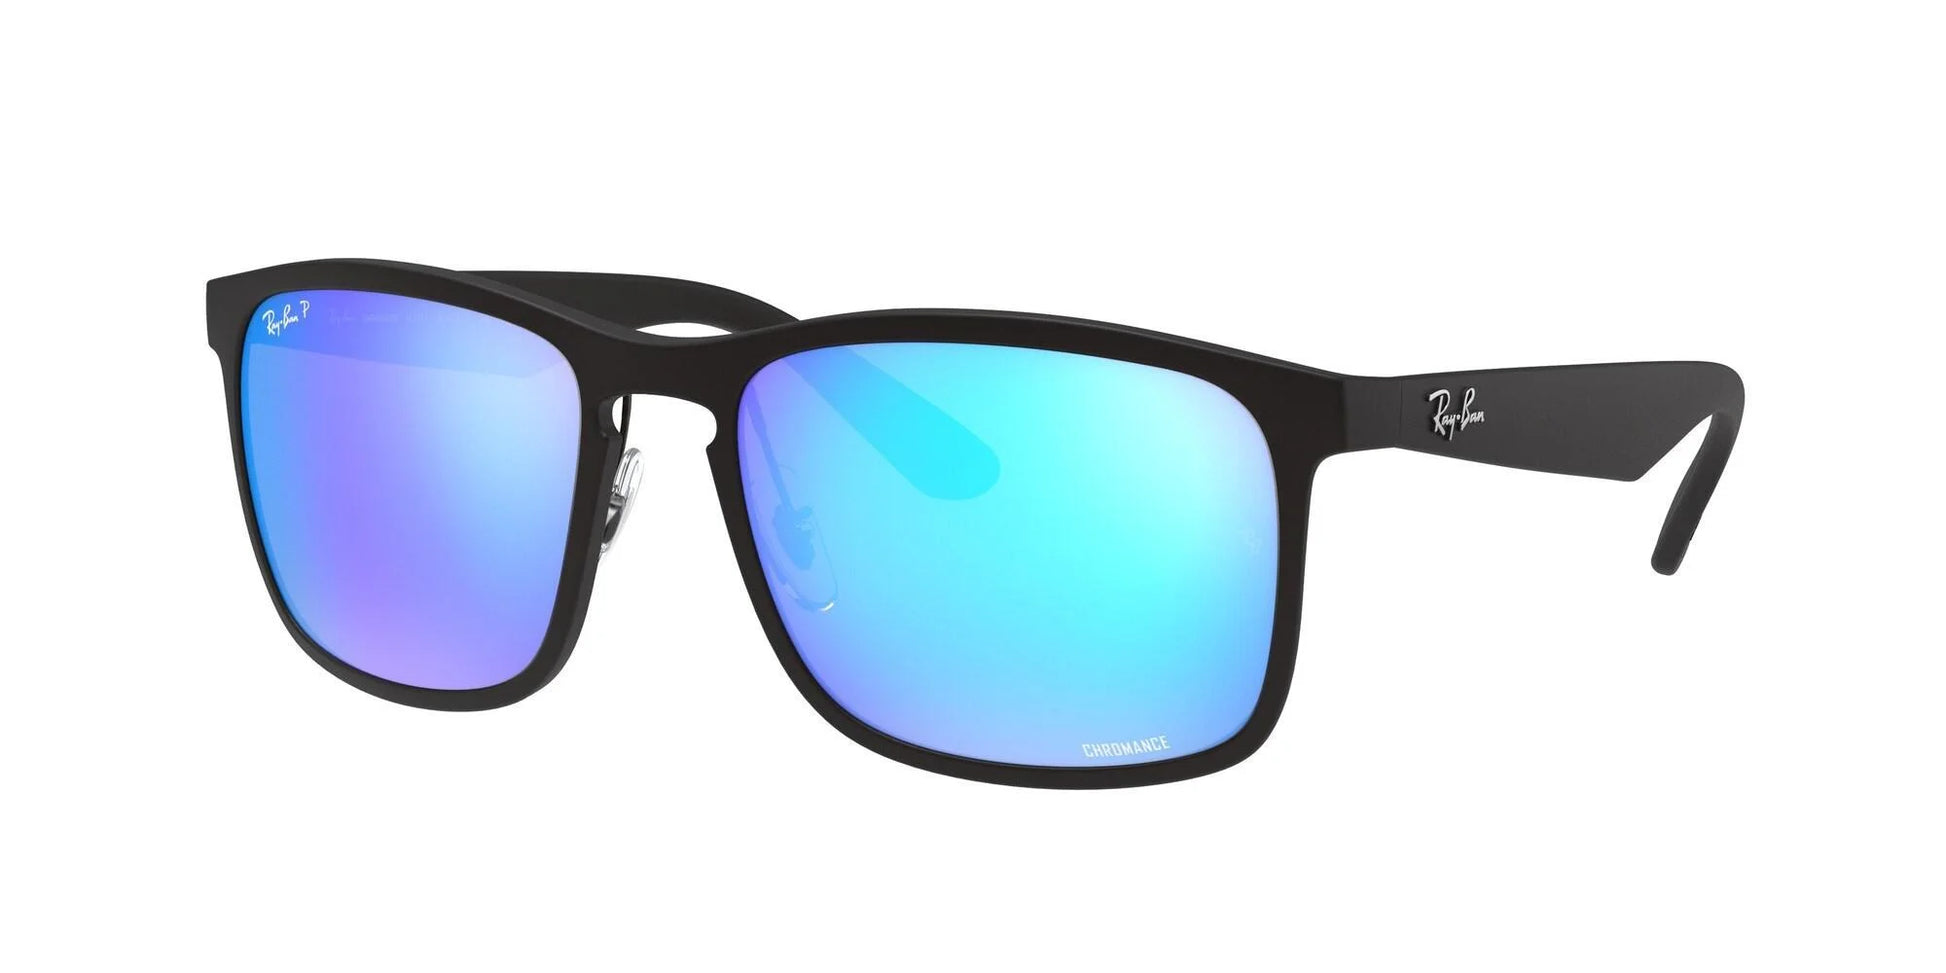 Ray-Ban RB4264 Sunglasses Black / Blue (Polarized)